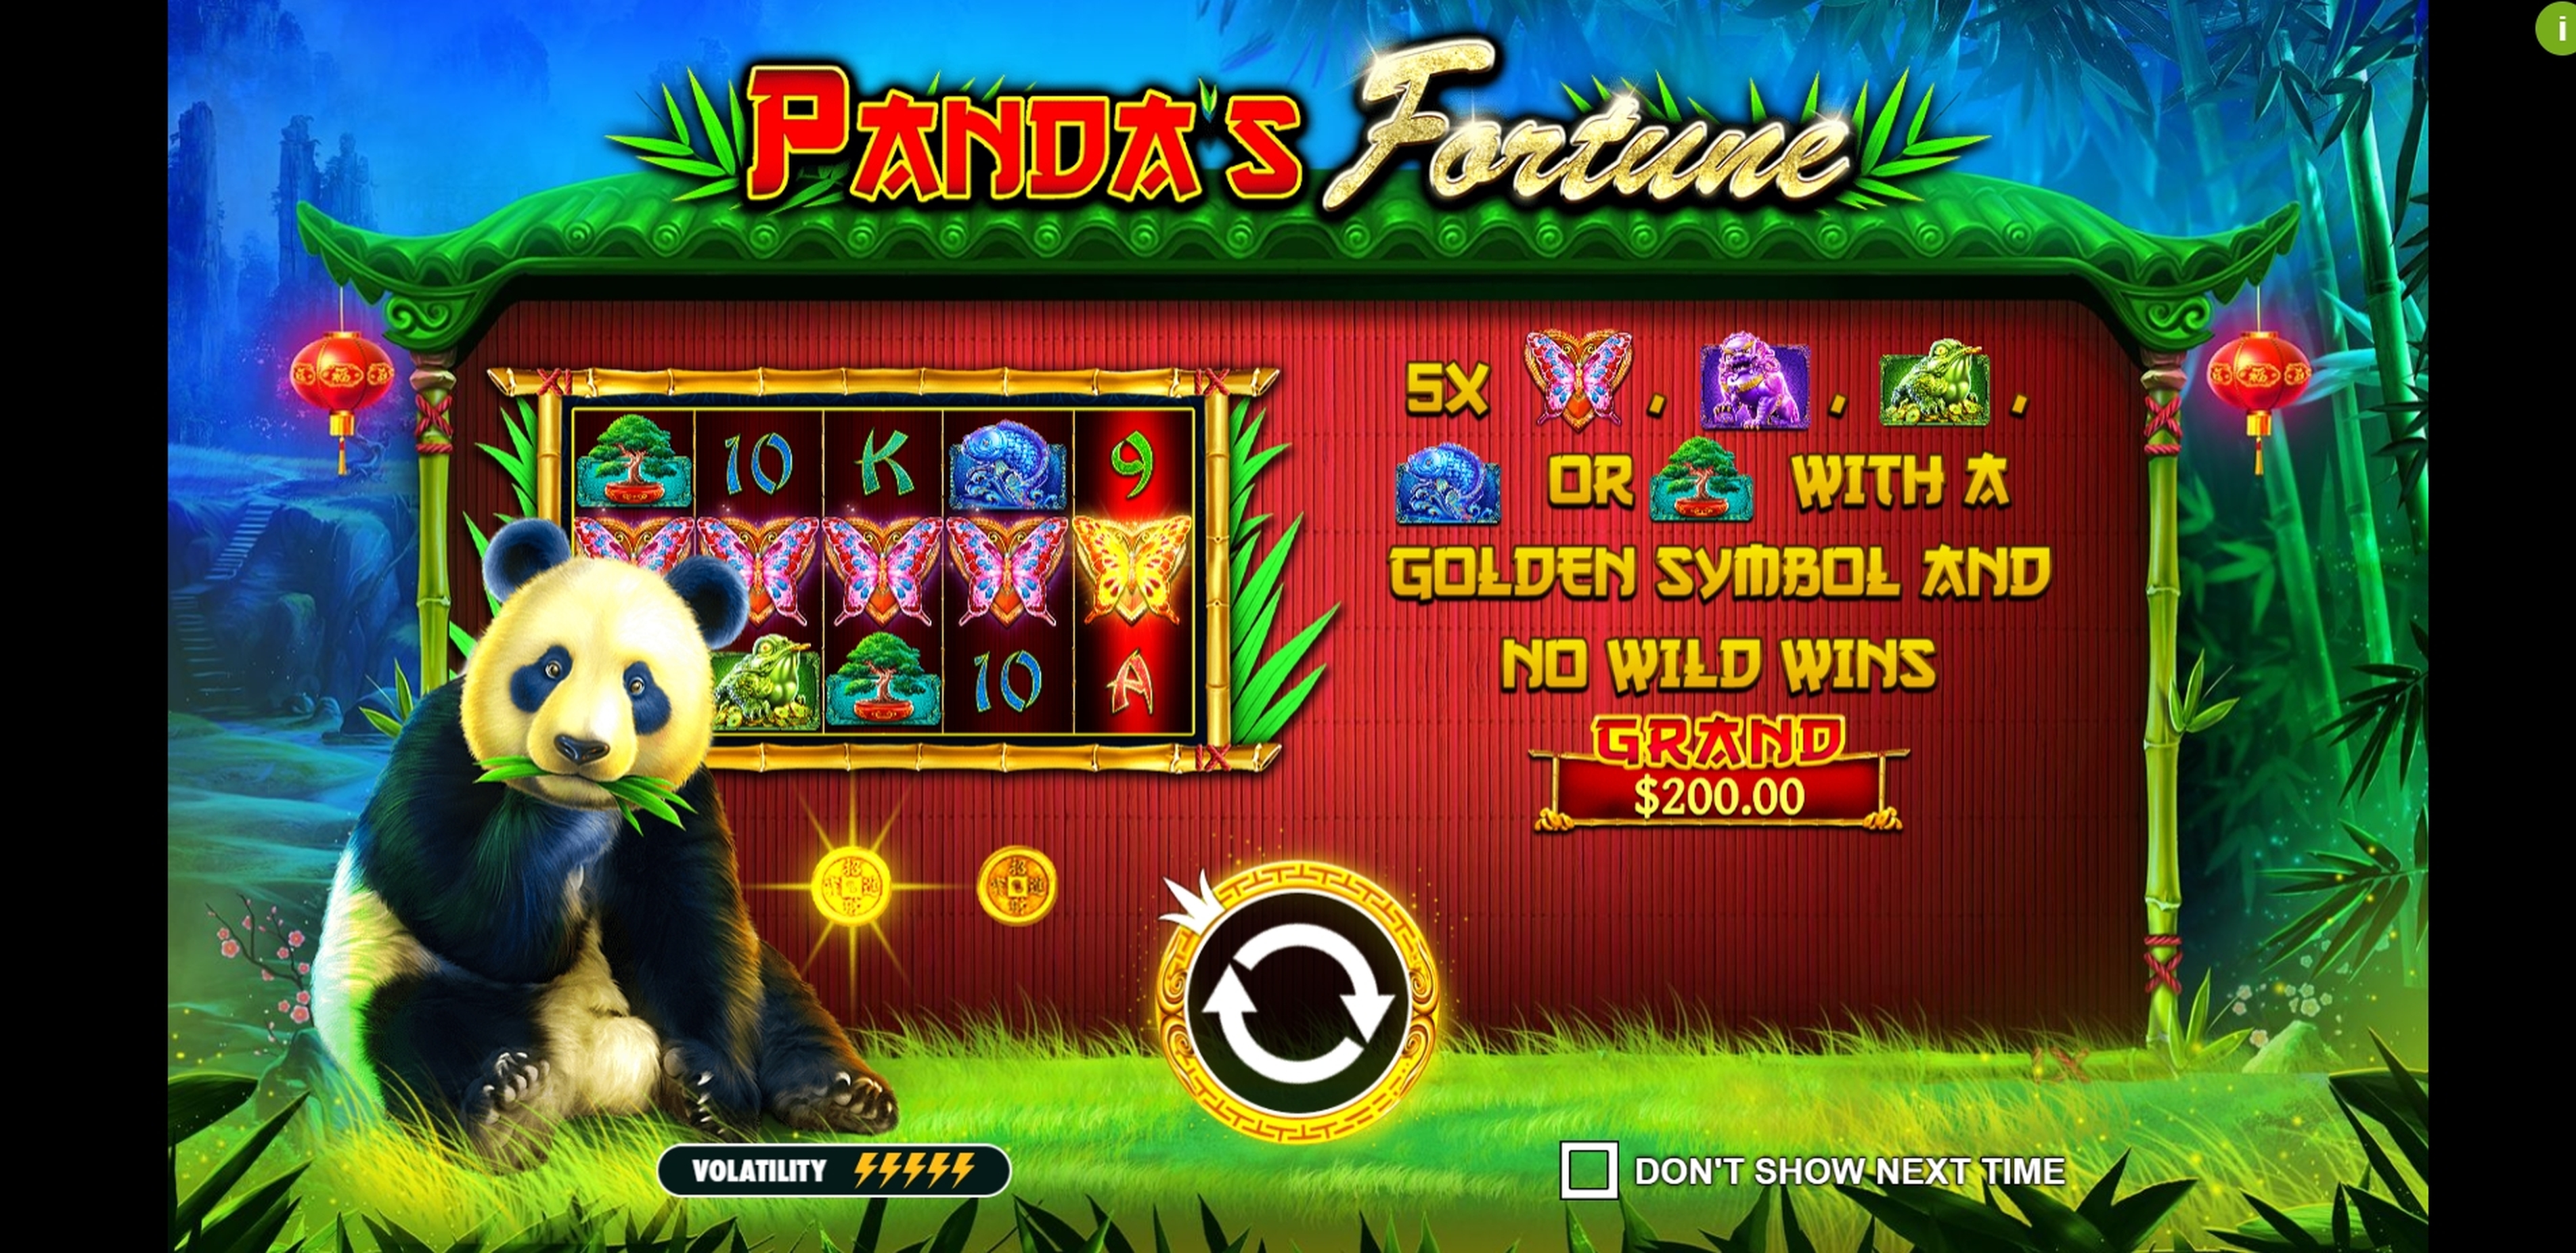 Play Panda's Fortune Free Casino Slot Game by Pragmatic Play